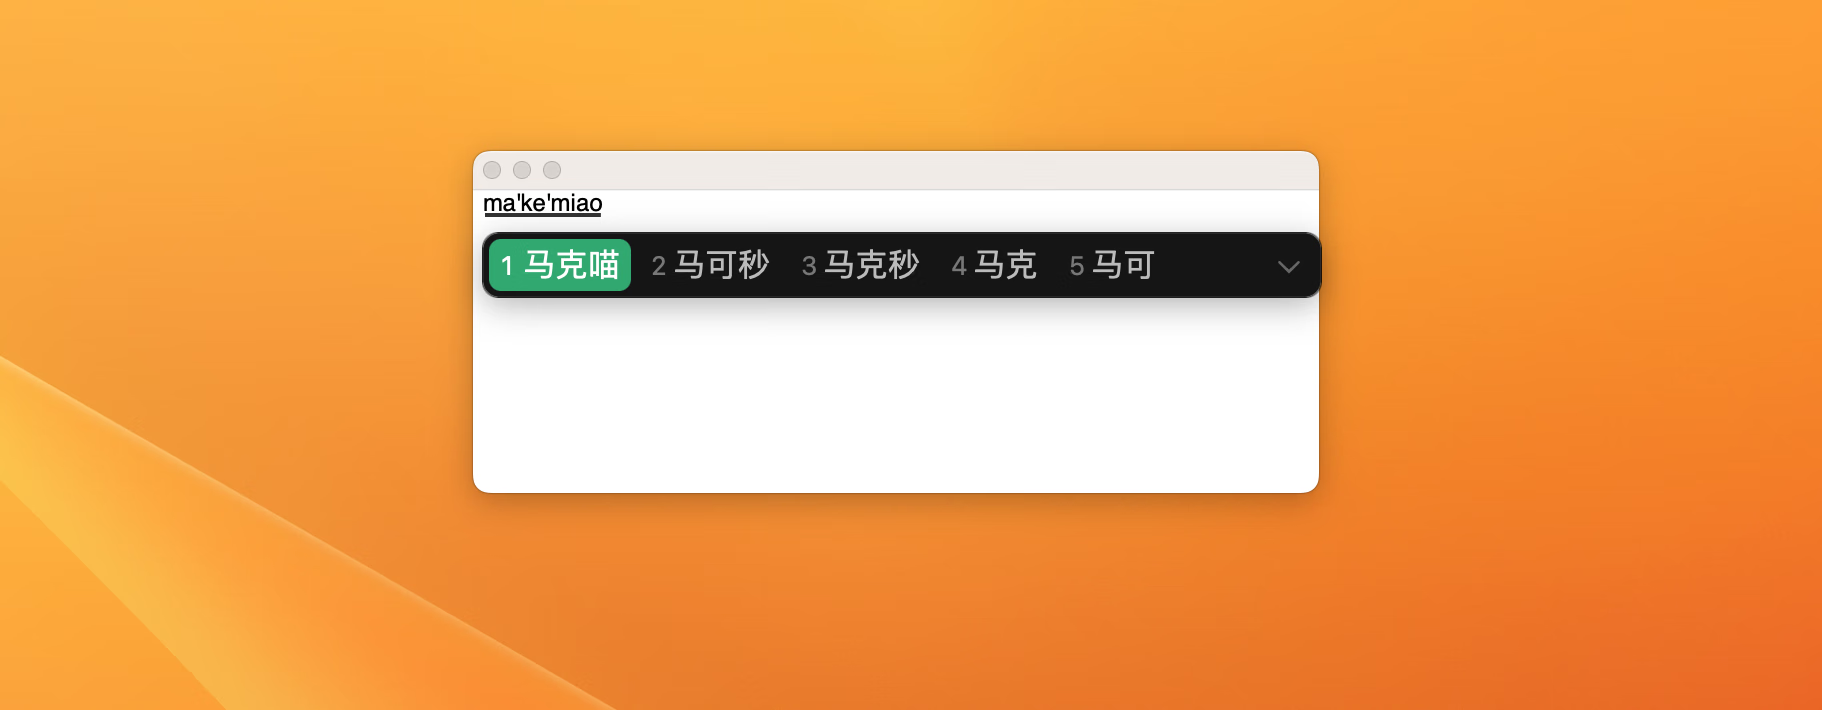 微信键盘输入法 for mac v0.9.0 微信官方出品的中文输入法